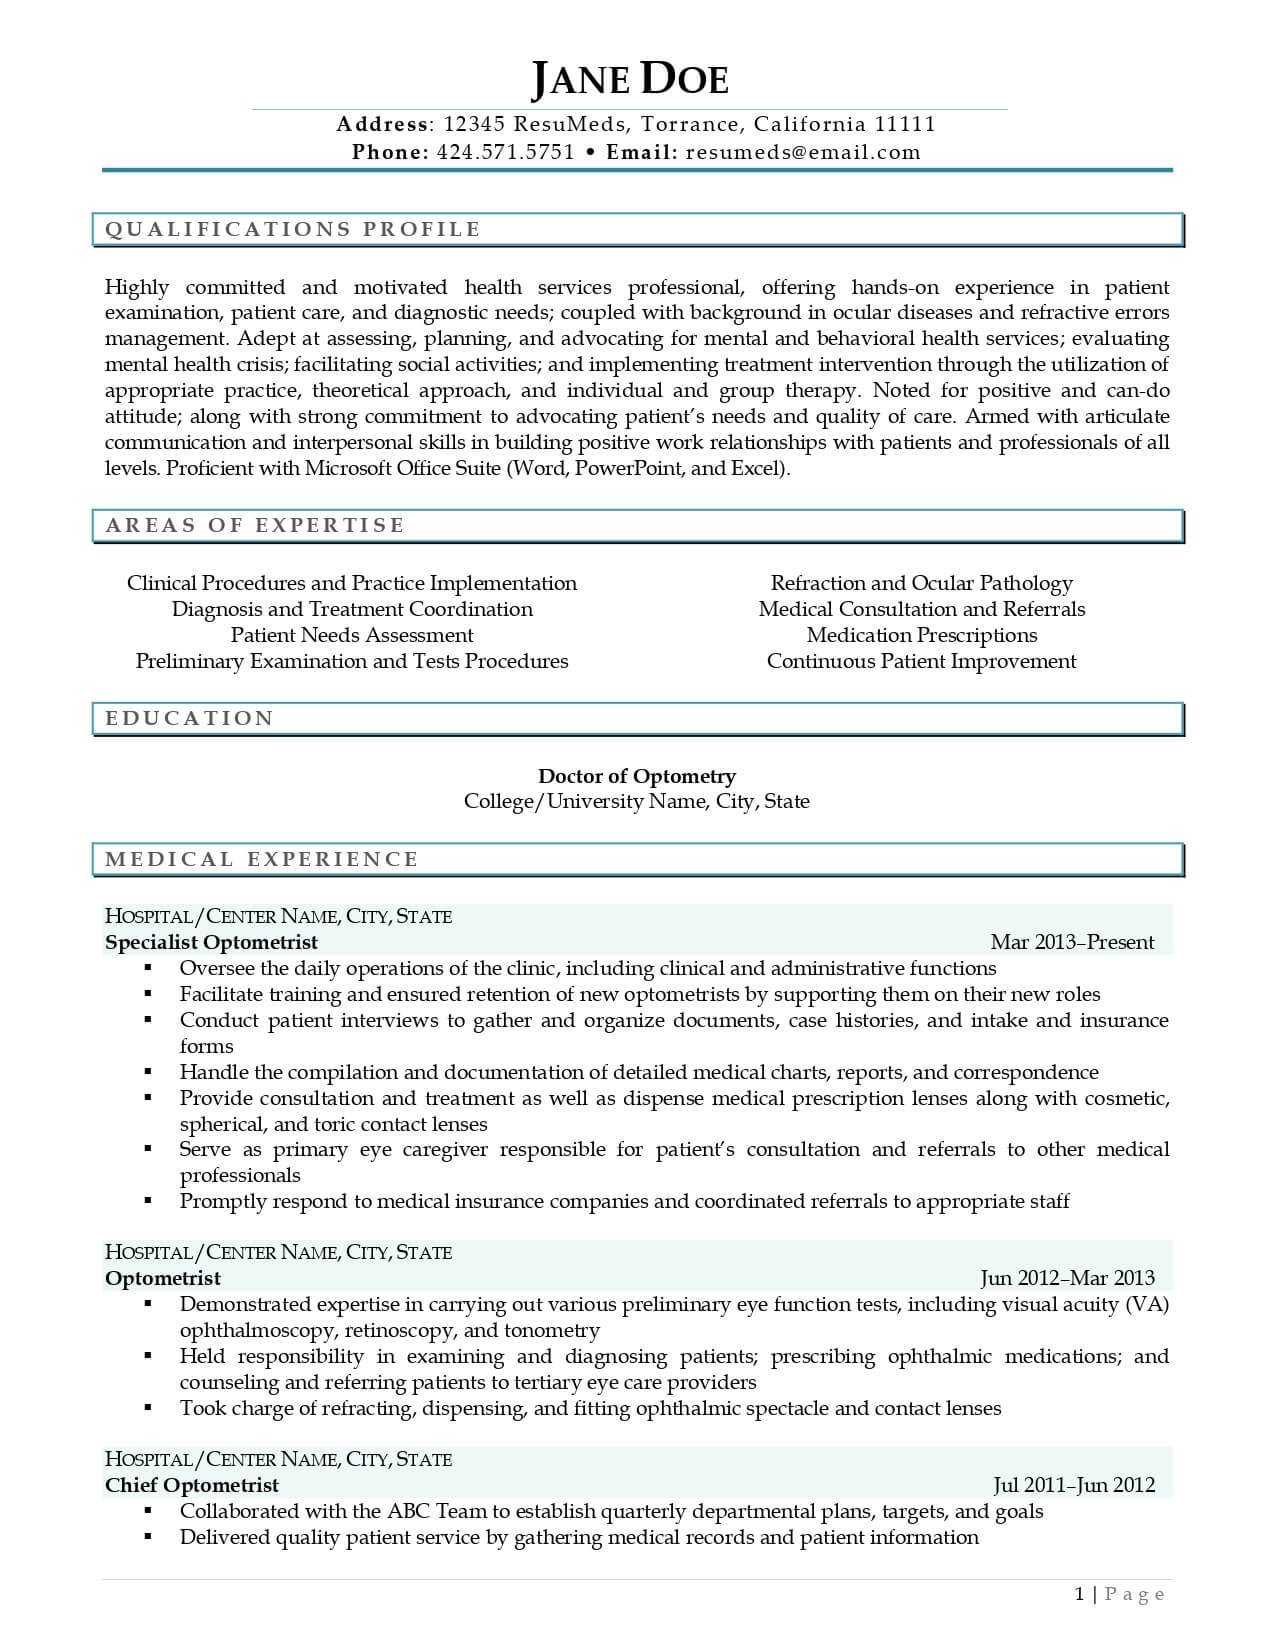 resumeds optometrist resume example page 0001